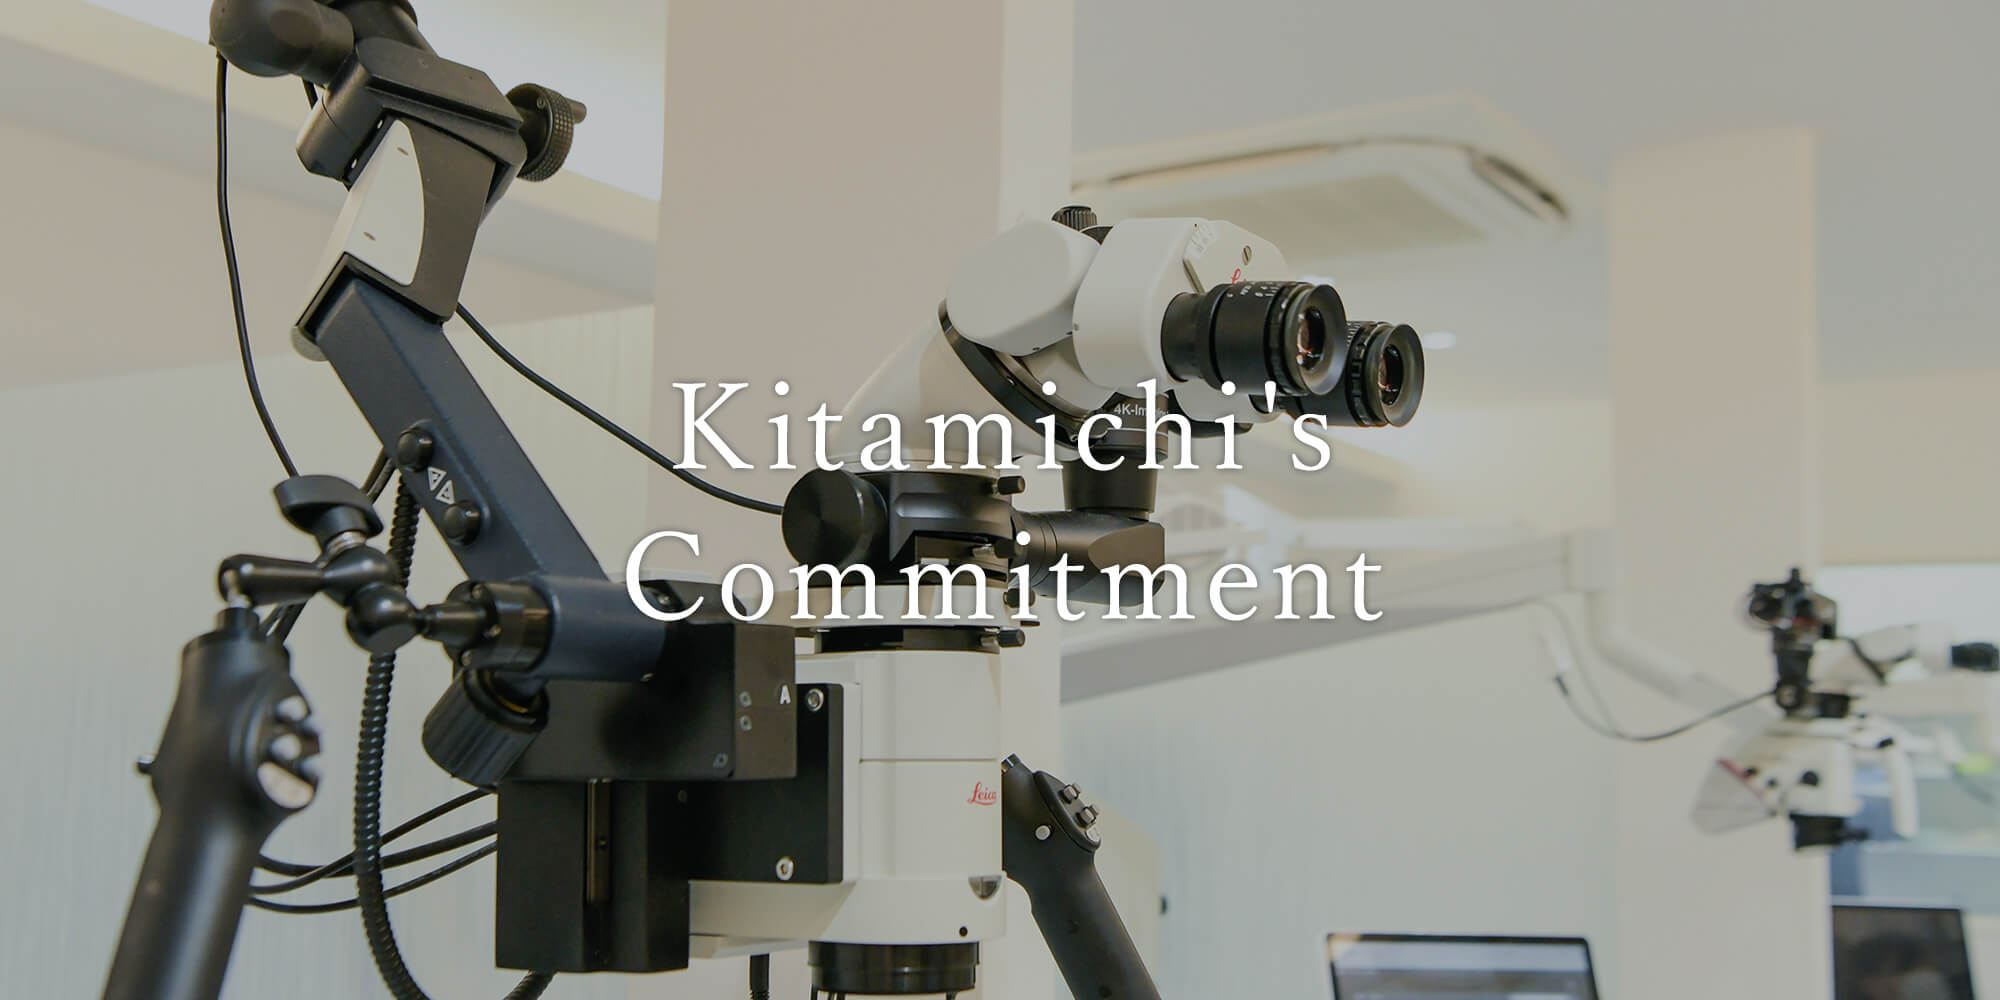 Kitamichi's Commitment